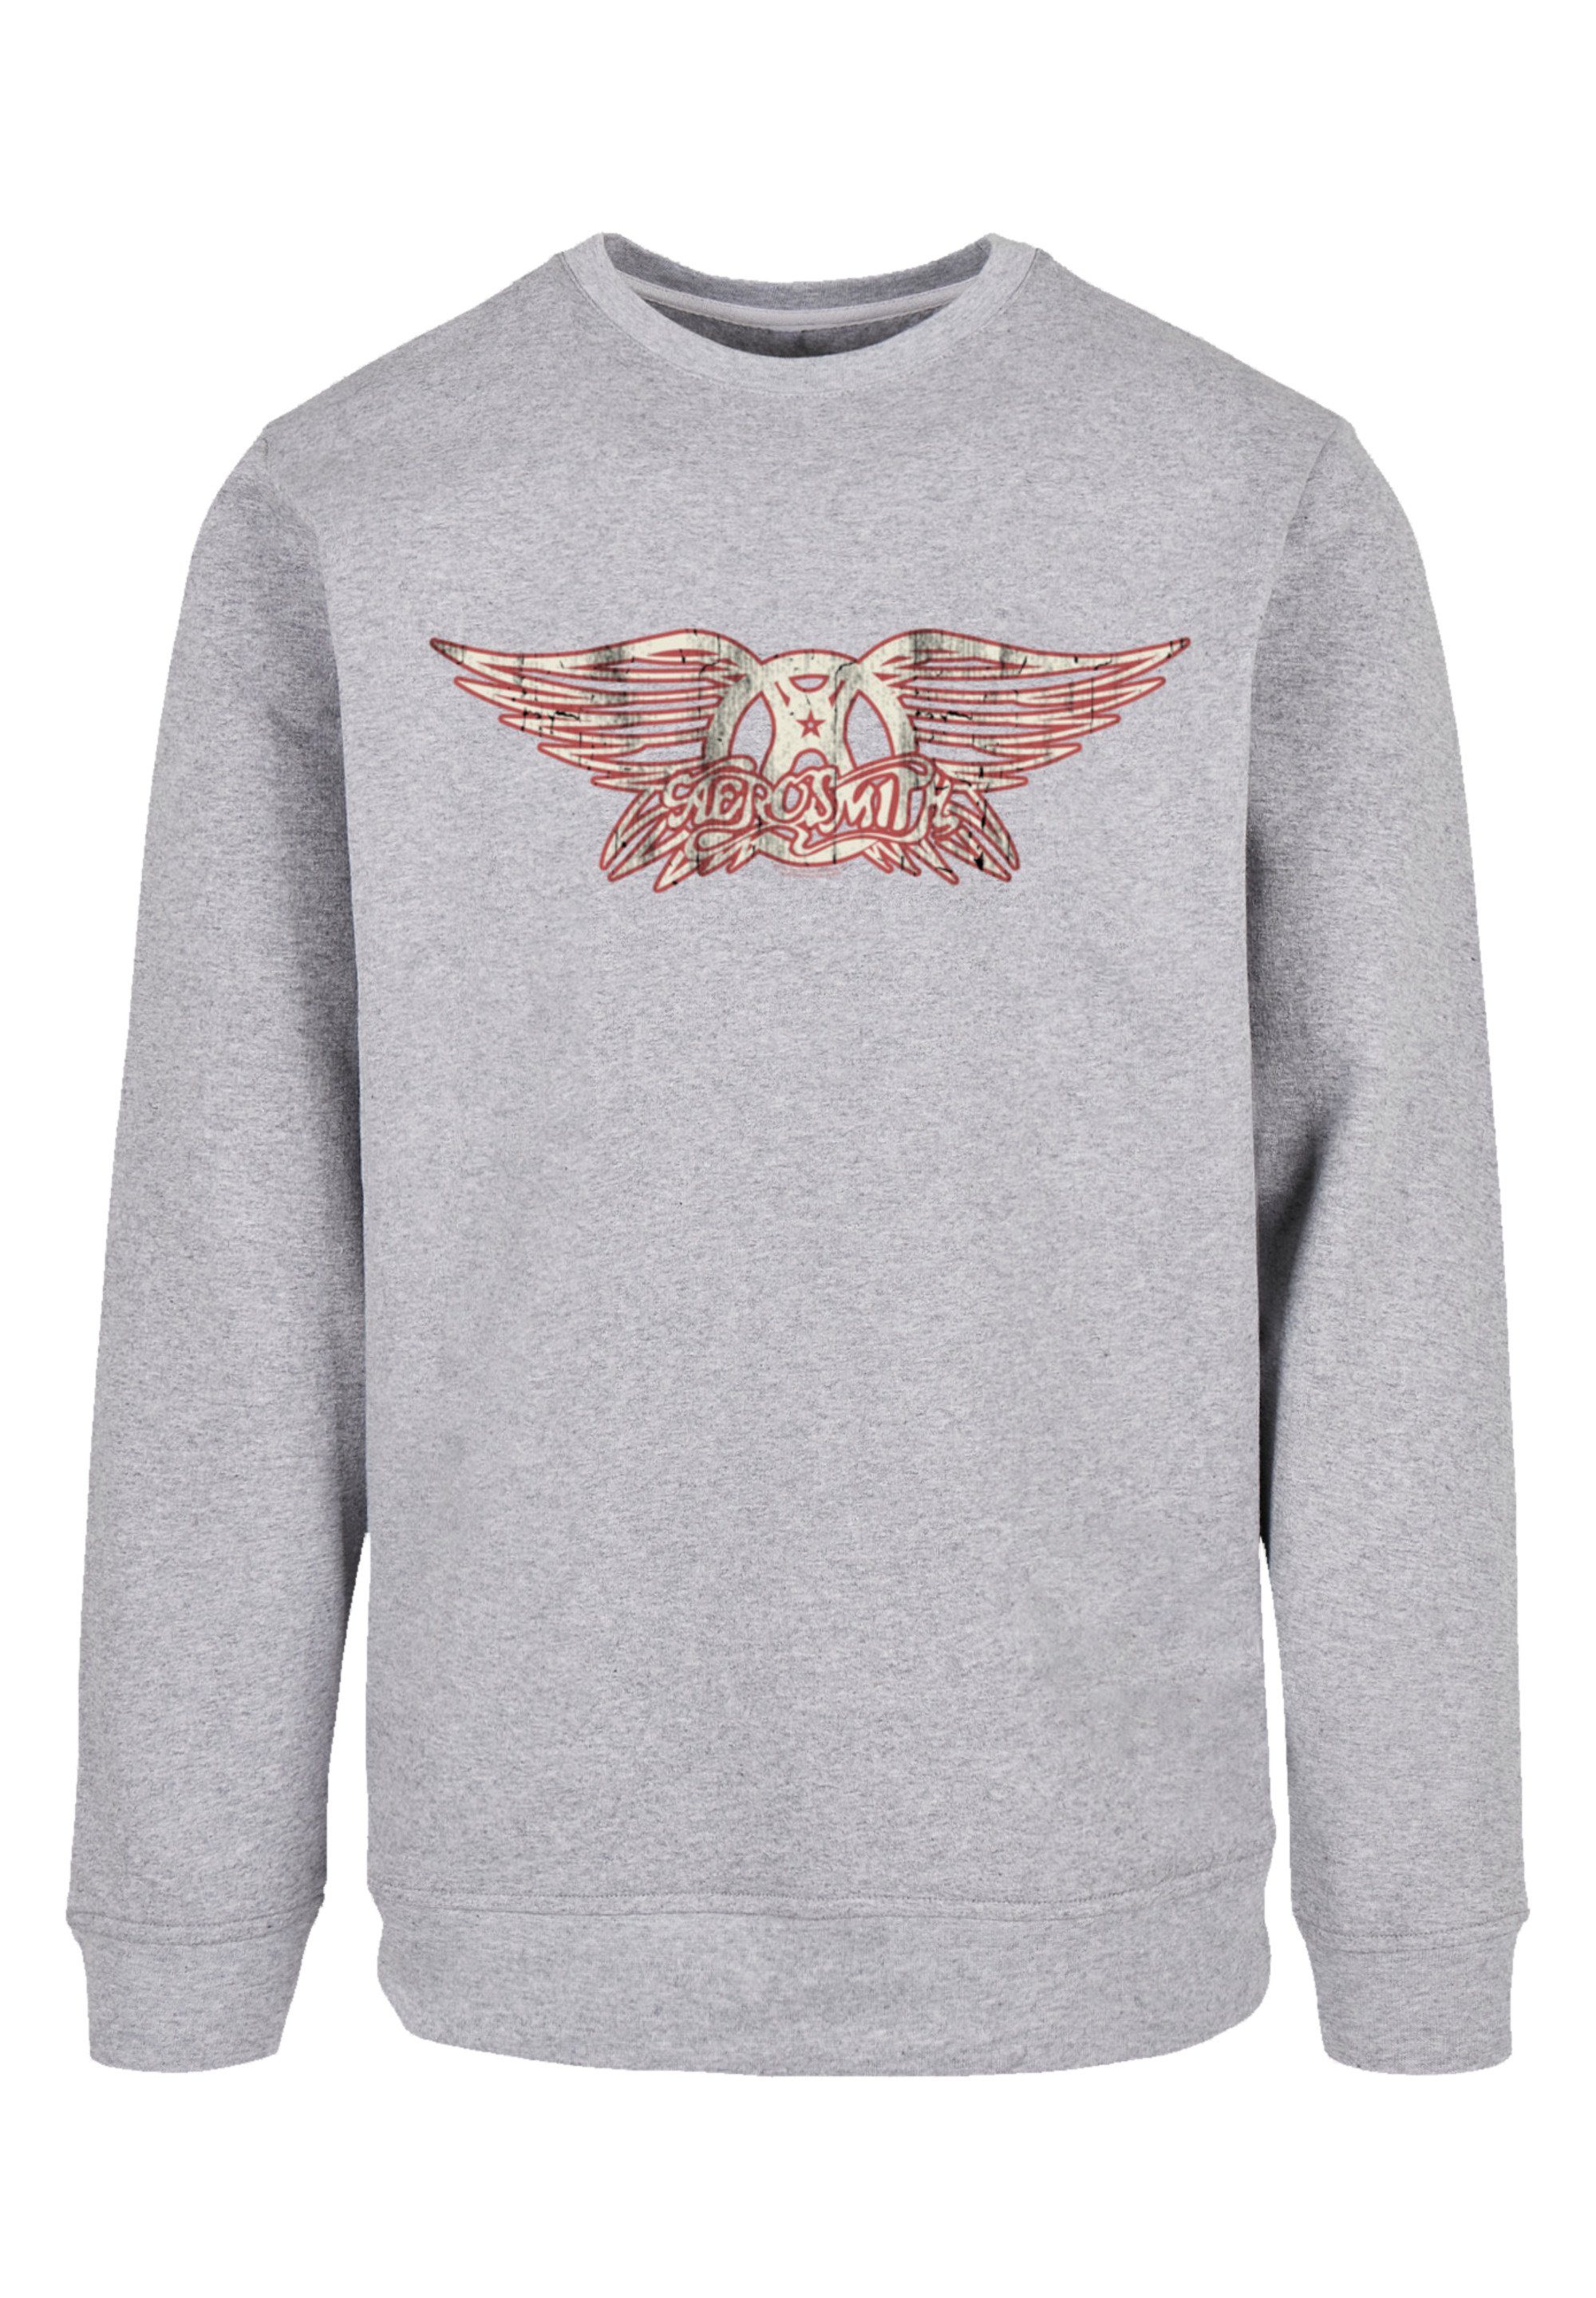 Aerosmith heather Rock-Musik, Logo F4NT4STIC Qualität, grey Rock Band Sweatshirt Premium Band